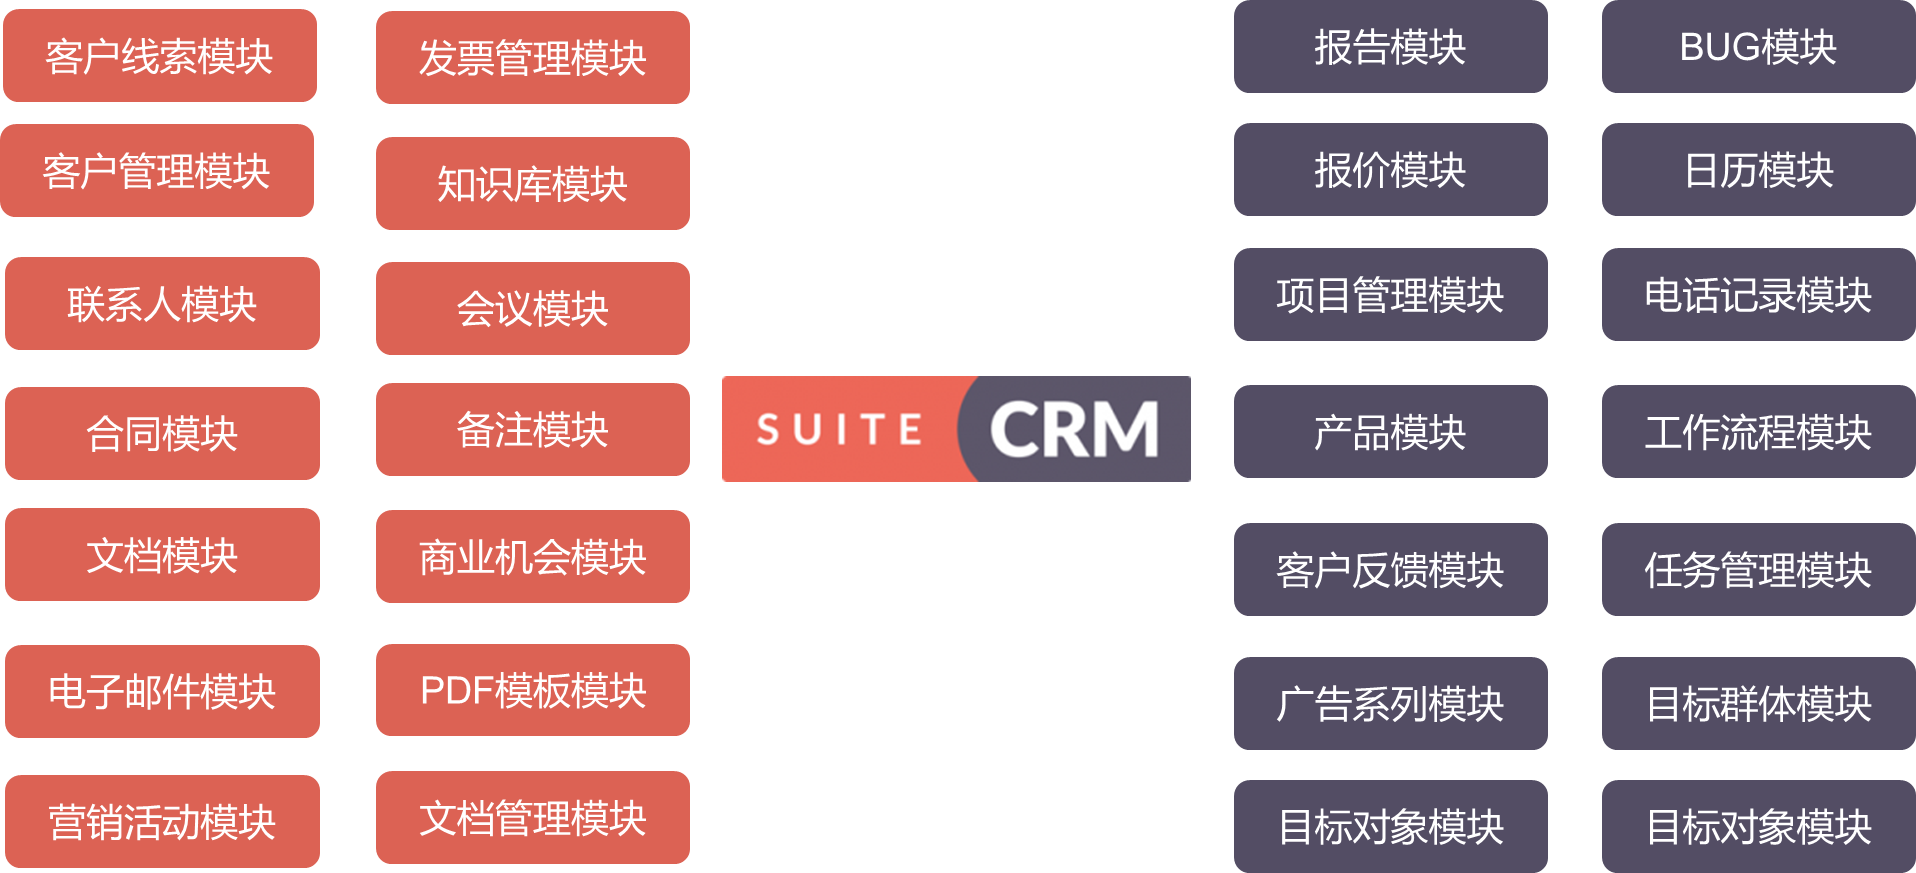 SuiteCRM功能模块